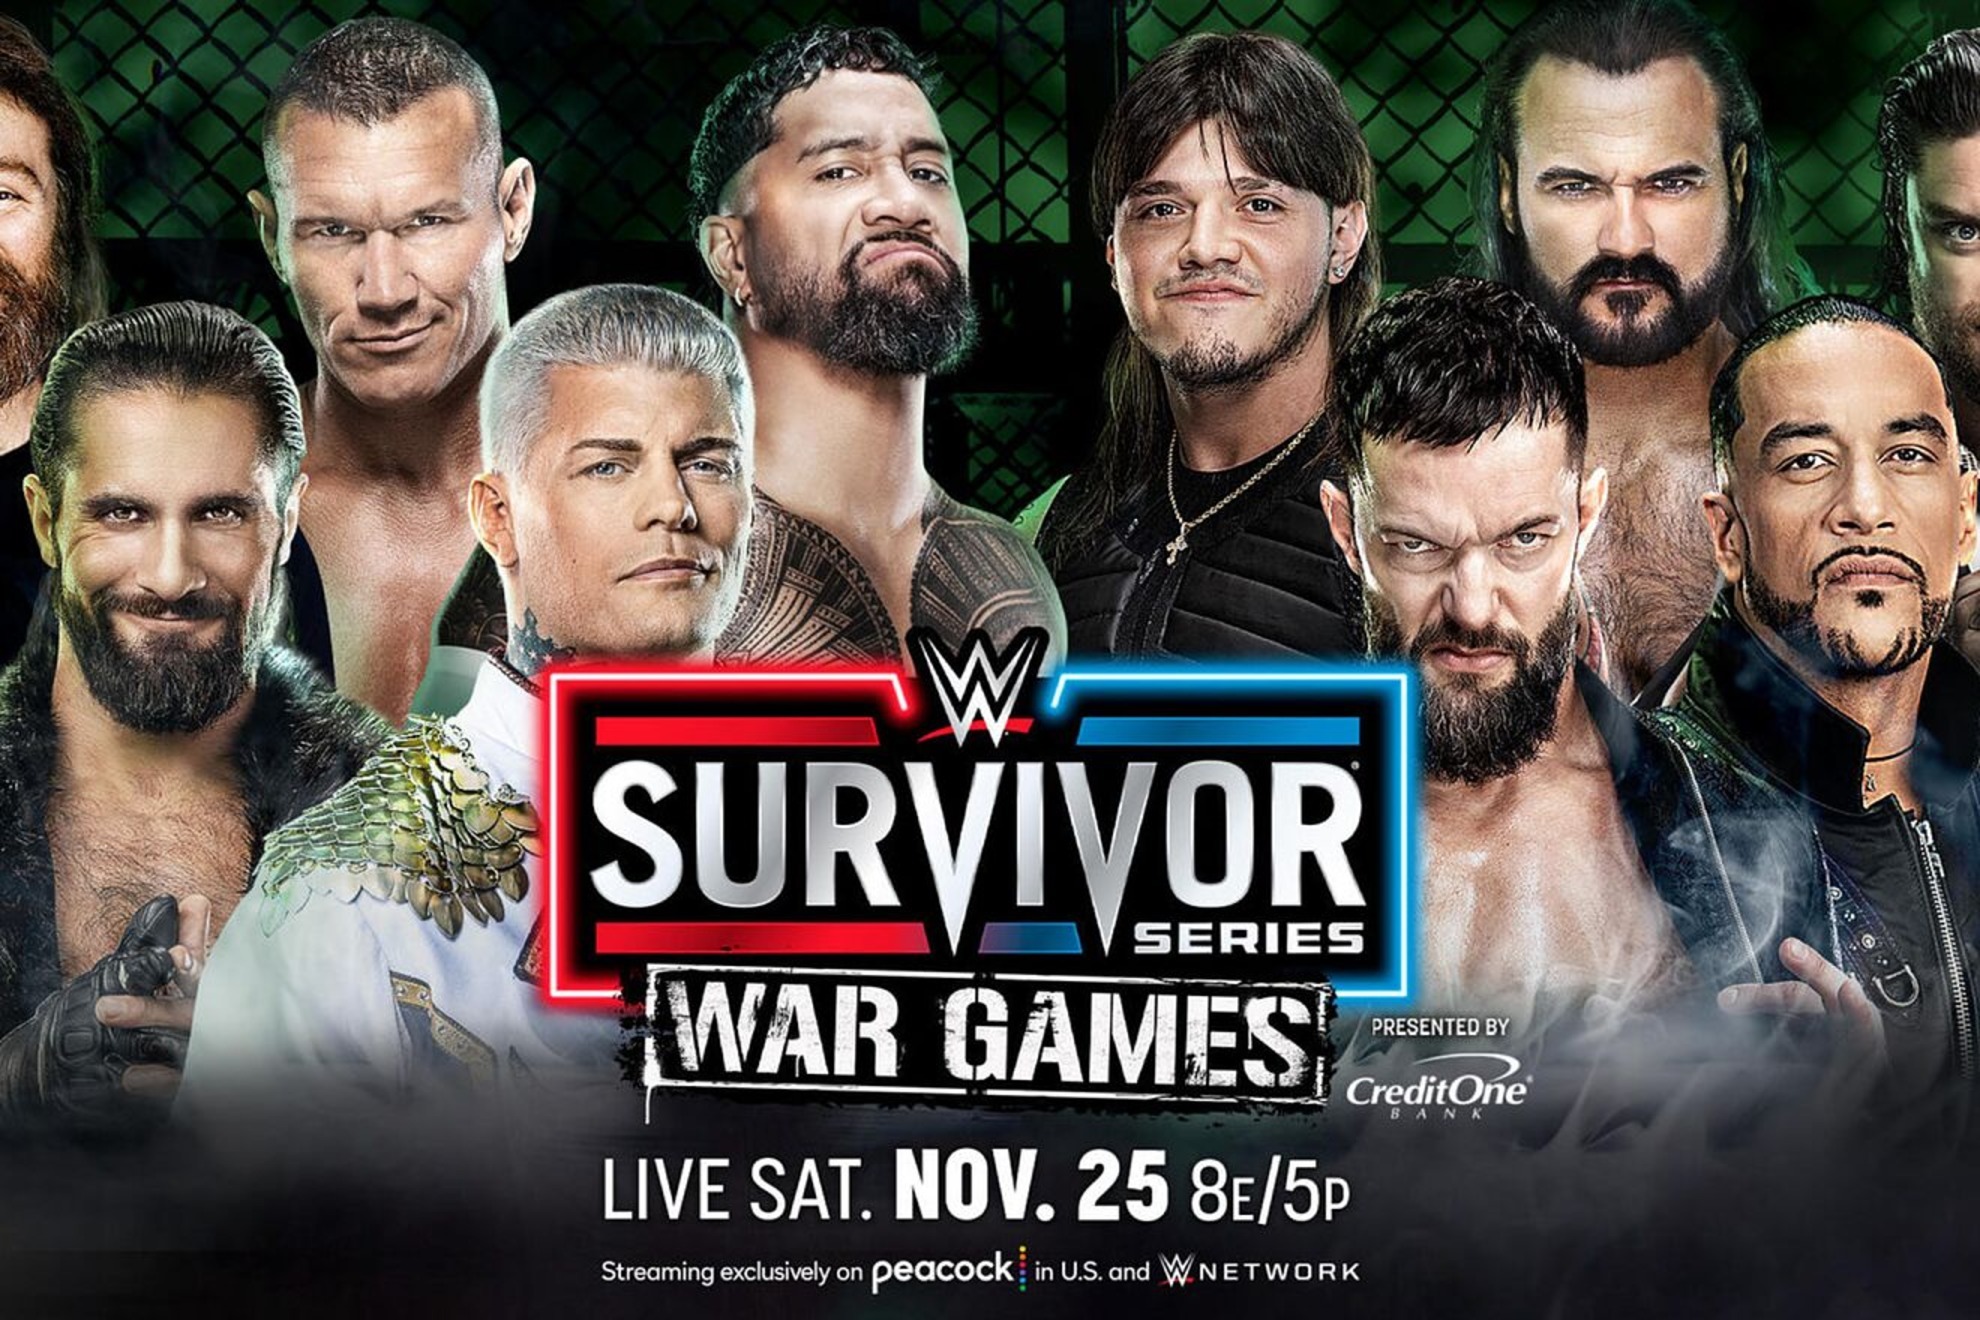 Randy Orton returns at Survivor Series